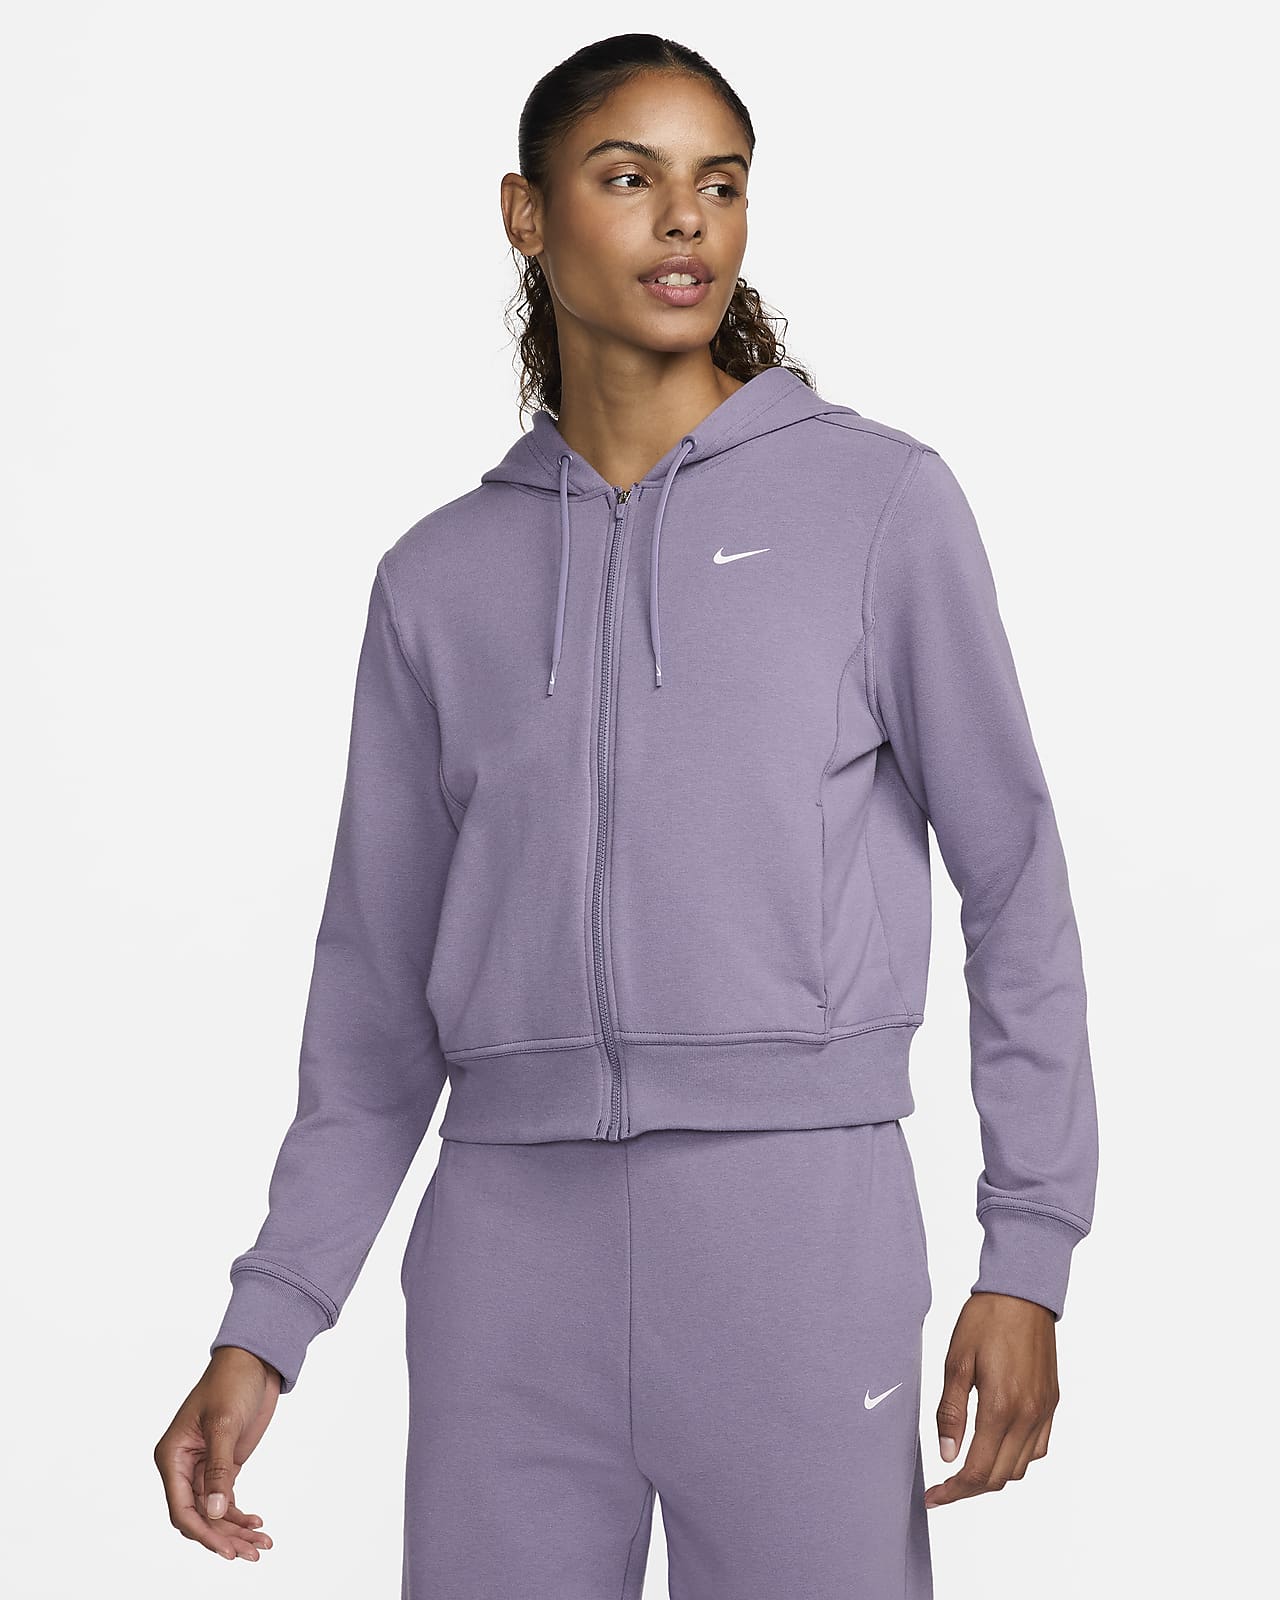 New Womens Nike Small Dri Fit Pull Over Fleece Track Run Jacket $95  627001-483 on eBid United States